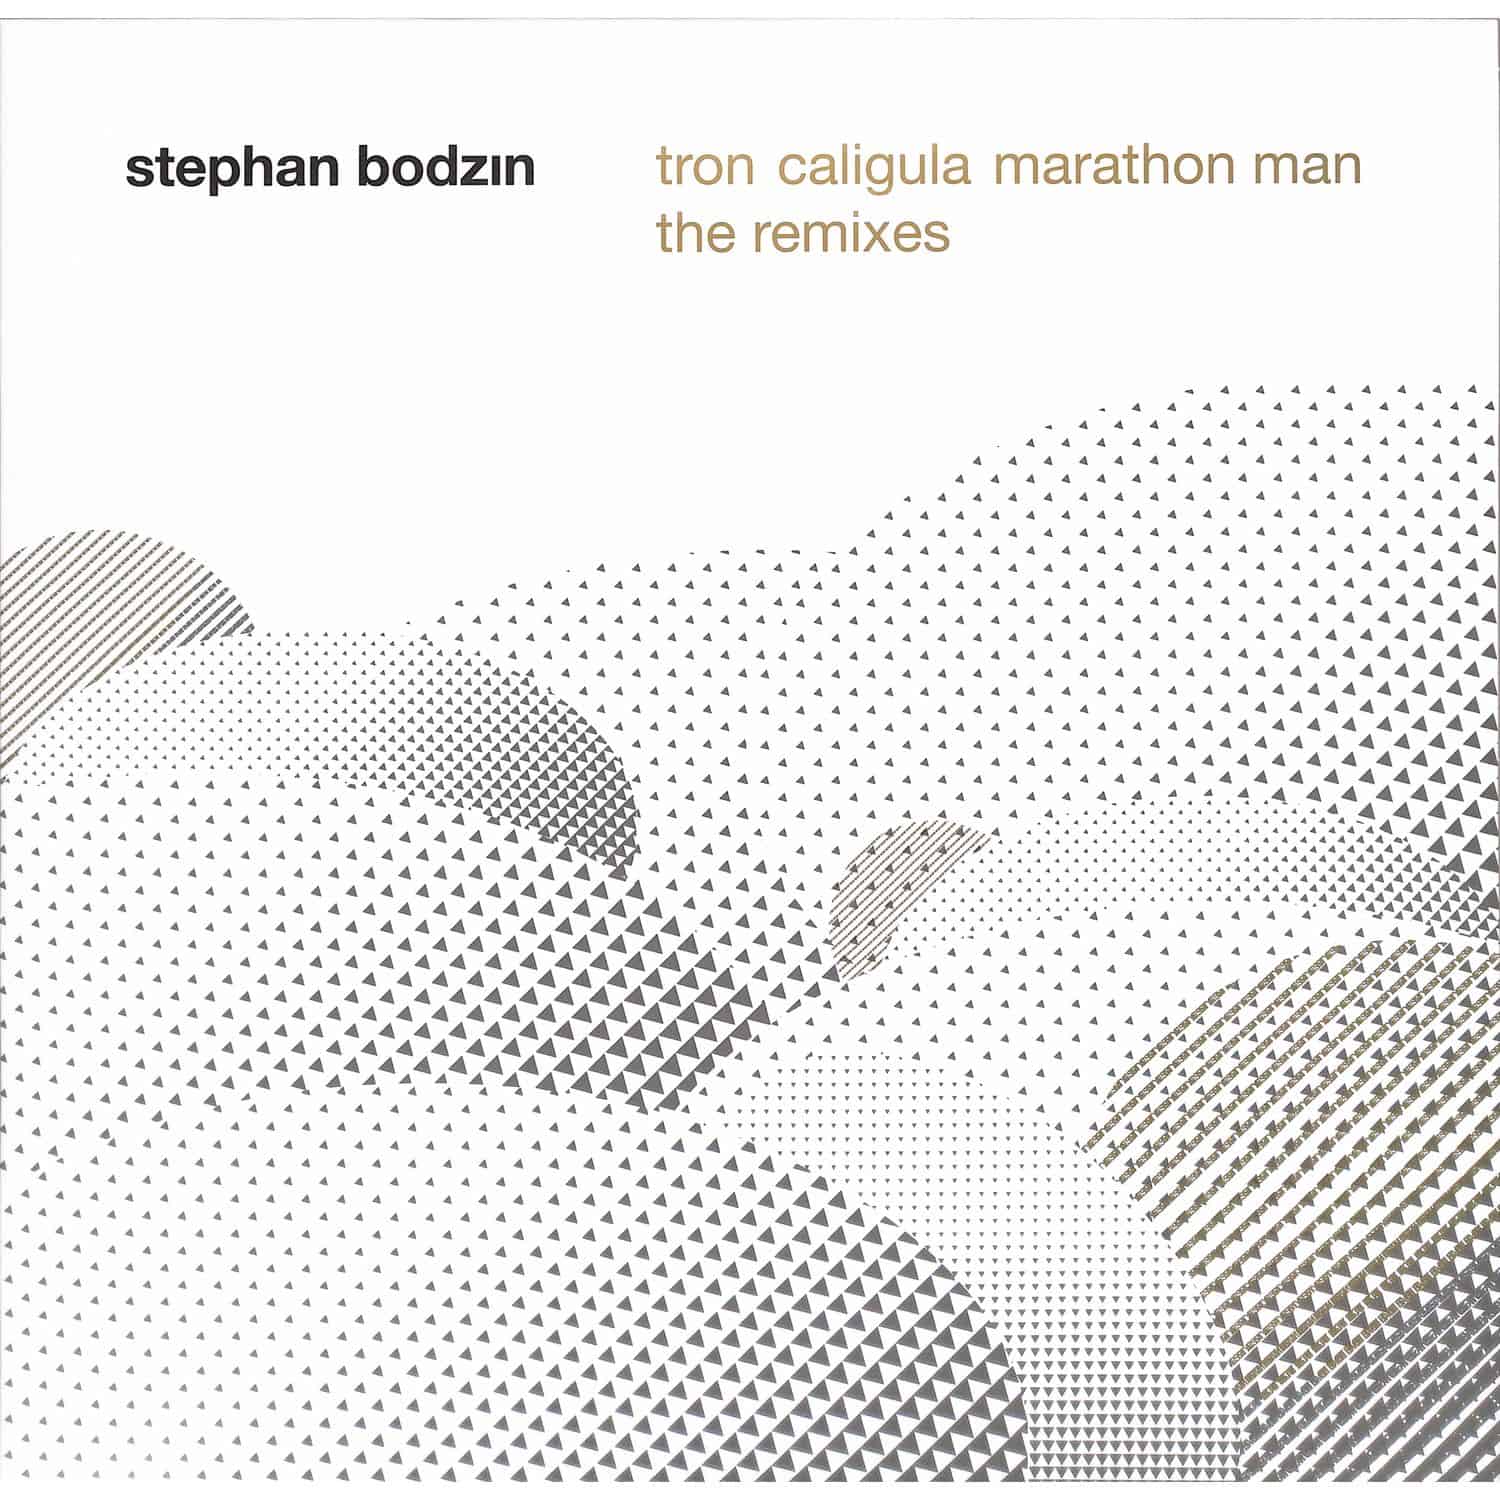 Stephan Bodzin - TRON CALIGULA MARATHON MAN 